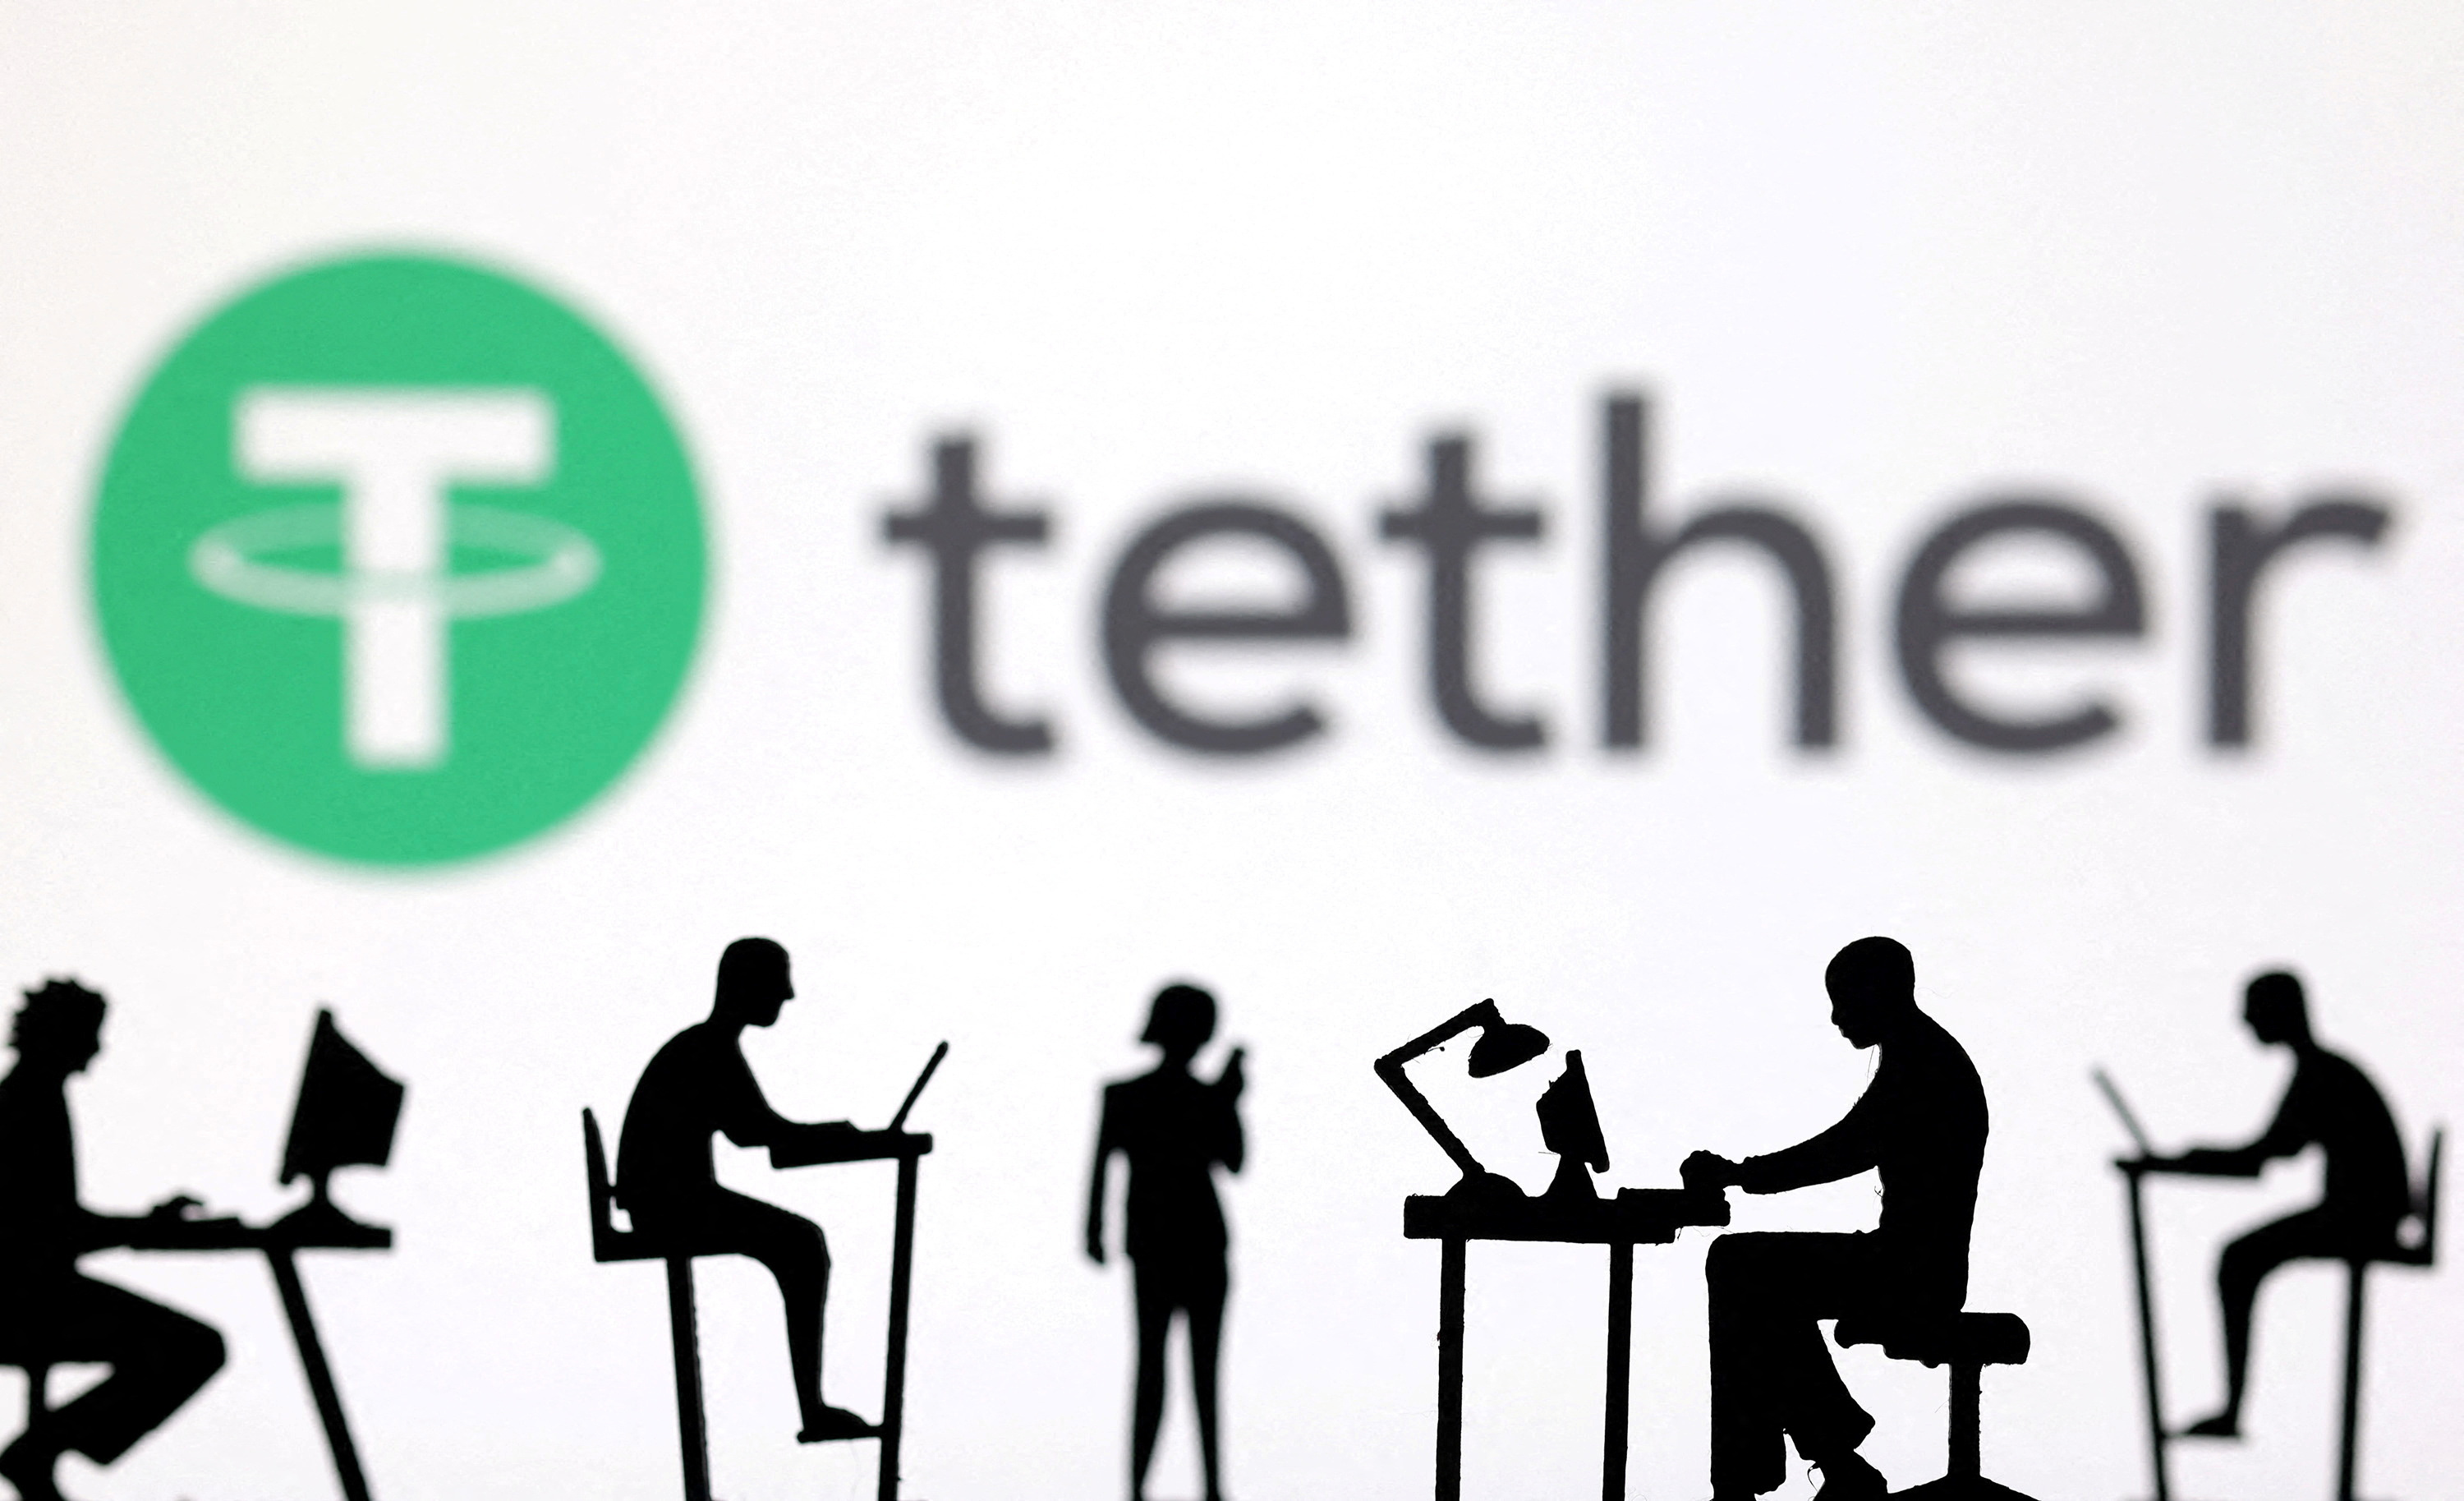 Illustration shows Tether logo